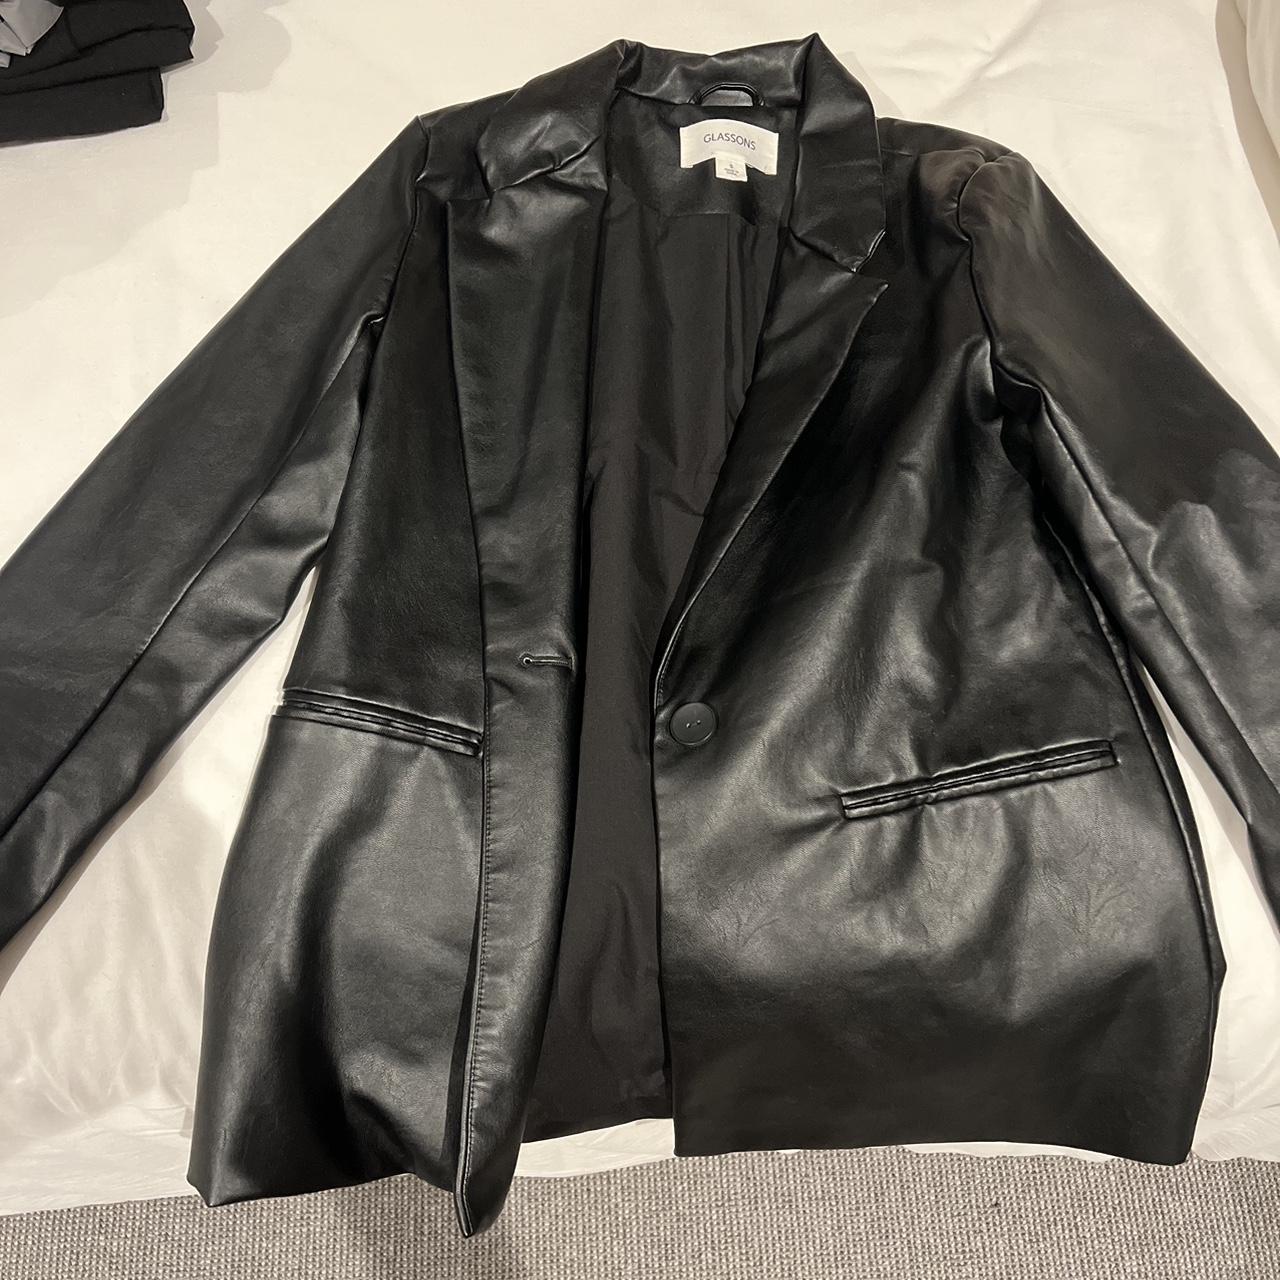 glassons faux leather blazer size S $20 - Depop